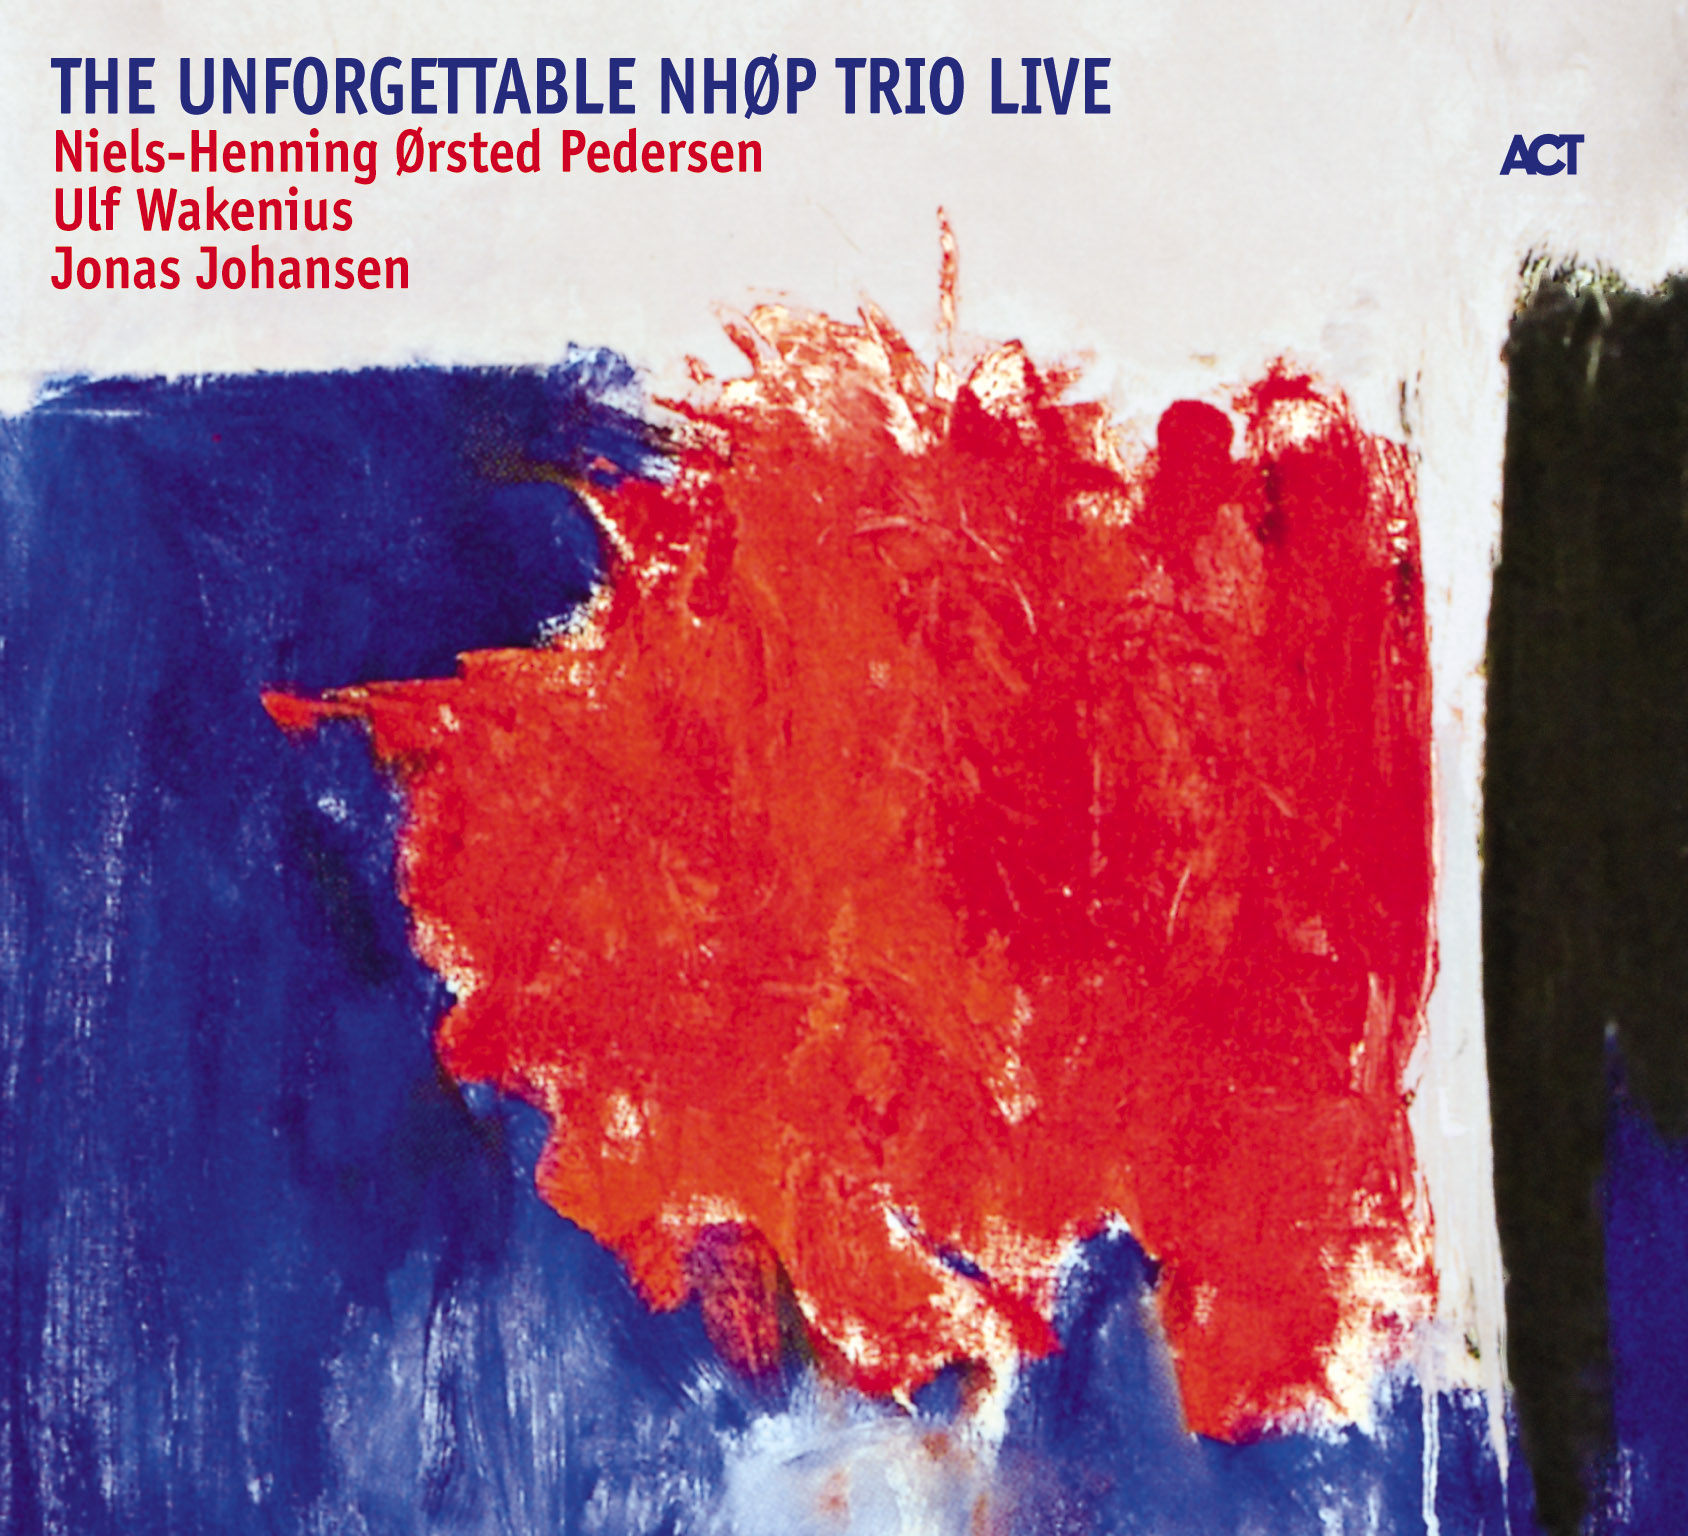 The Unforgettable NHØP Trio Live